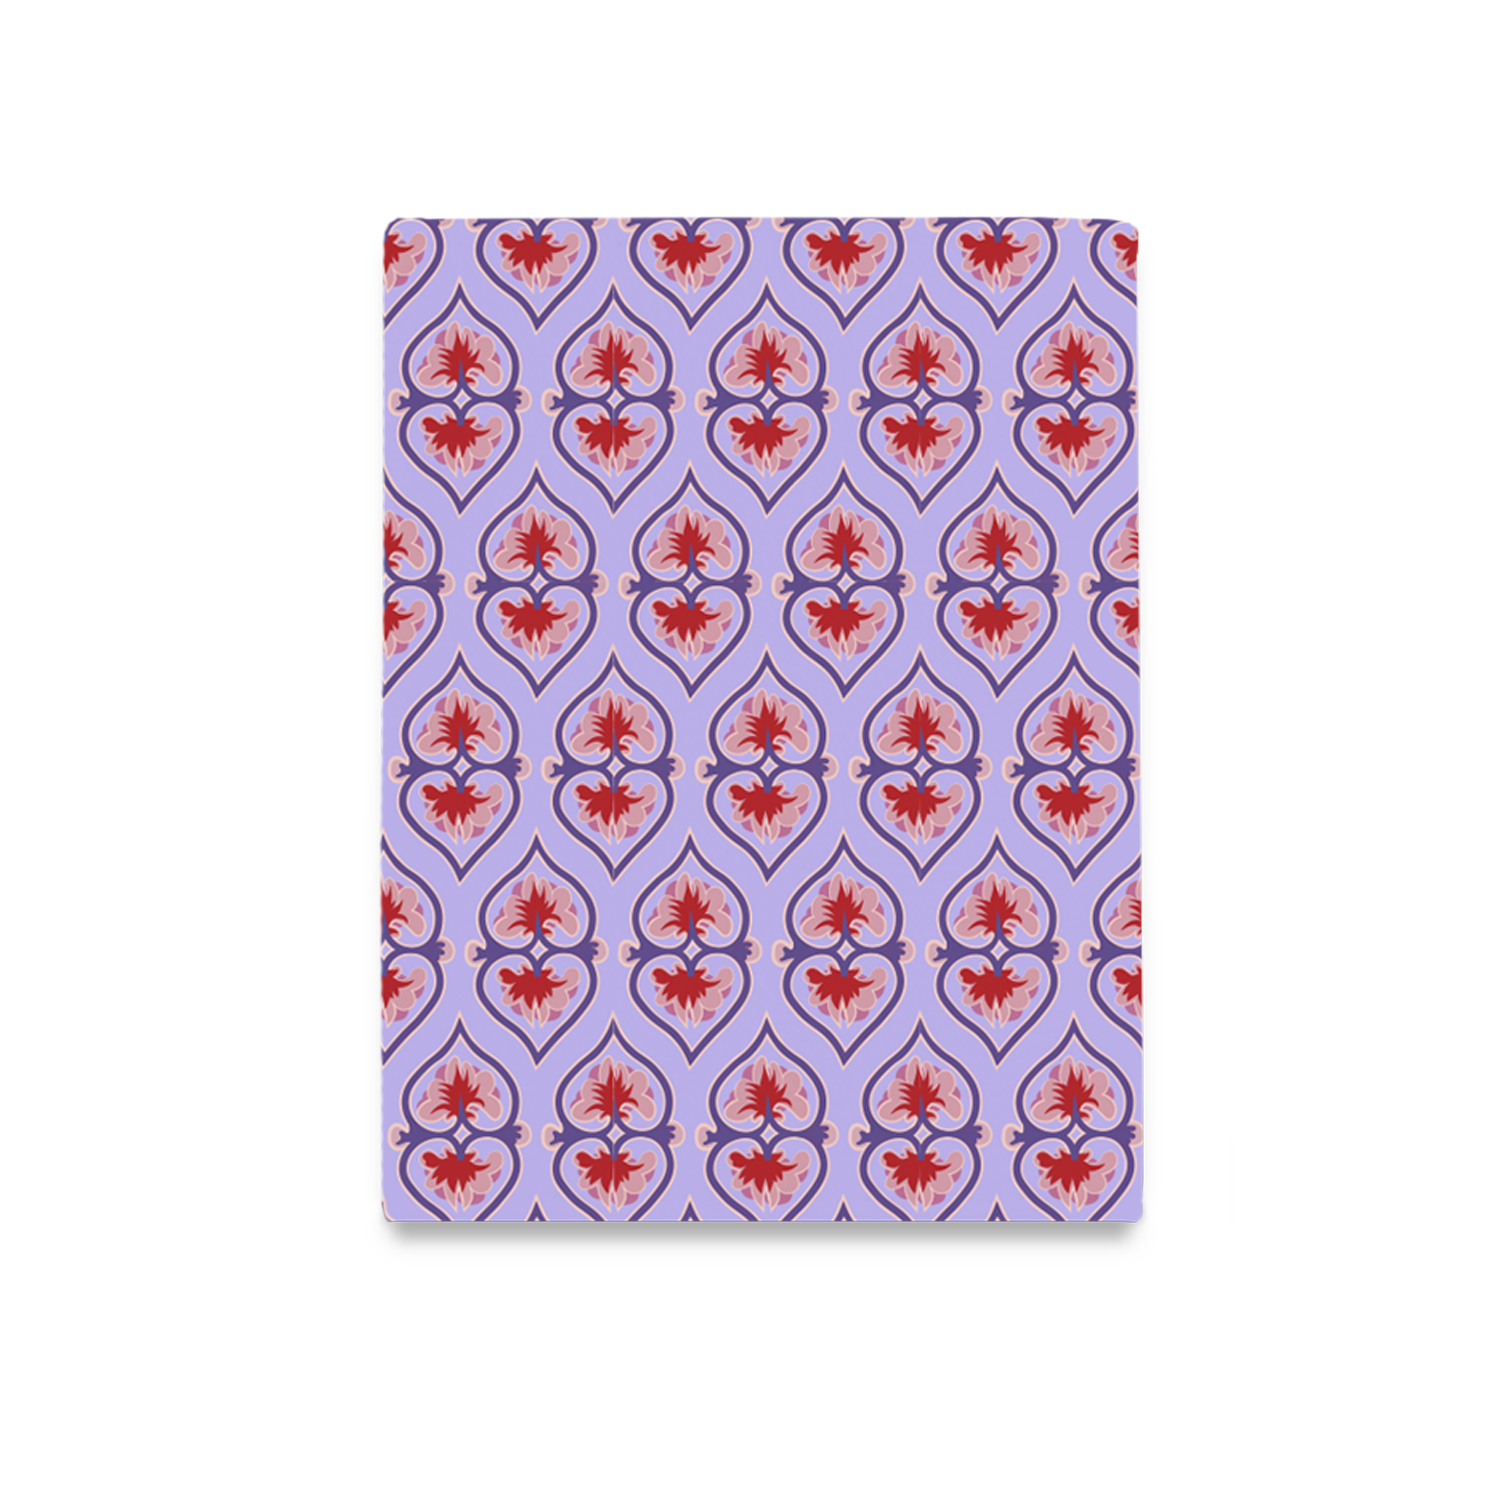 Gulisstsory (Sweetheart) Passport Cover (Purple)